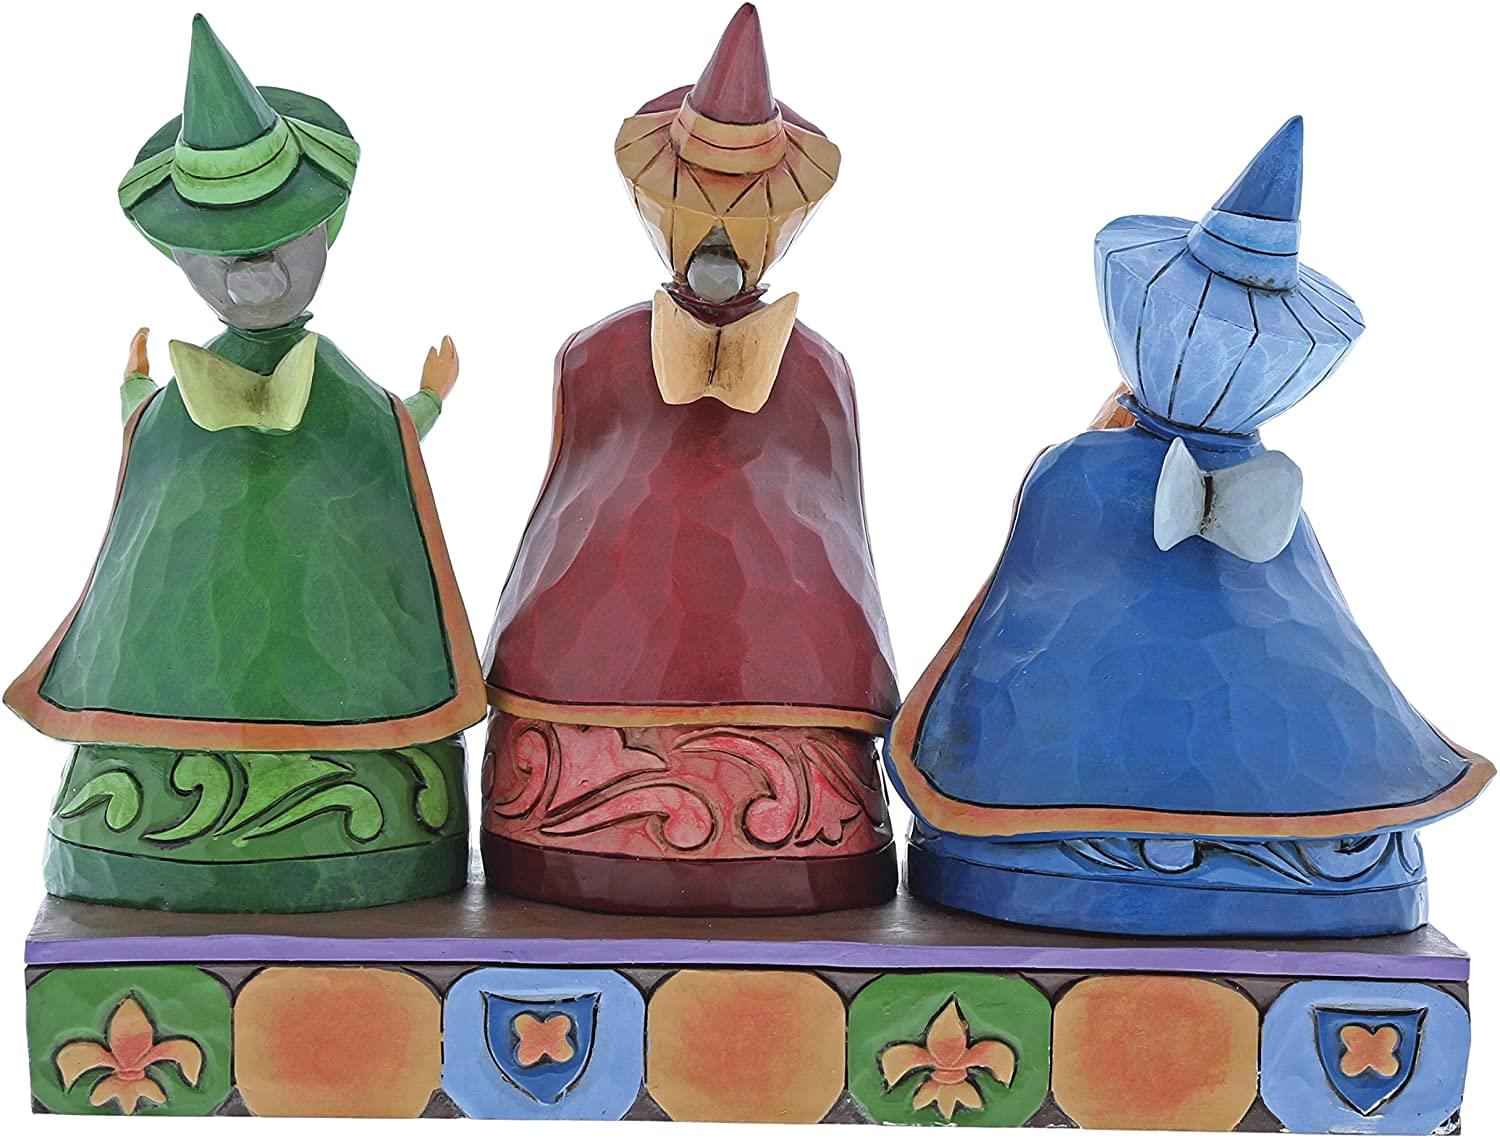 Disney Sleeping Beauty Royal Guests Three Fairies Figurine by Jim Shore